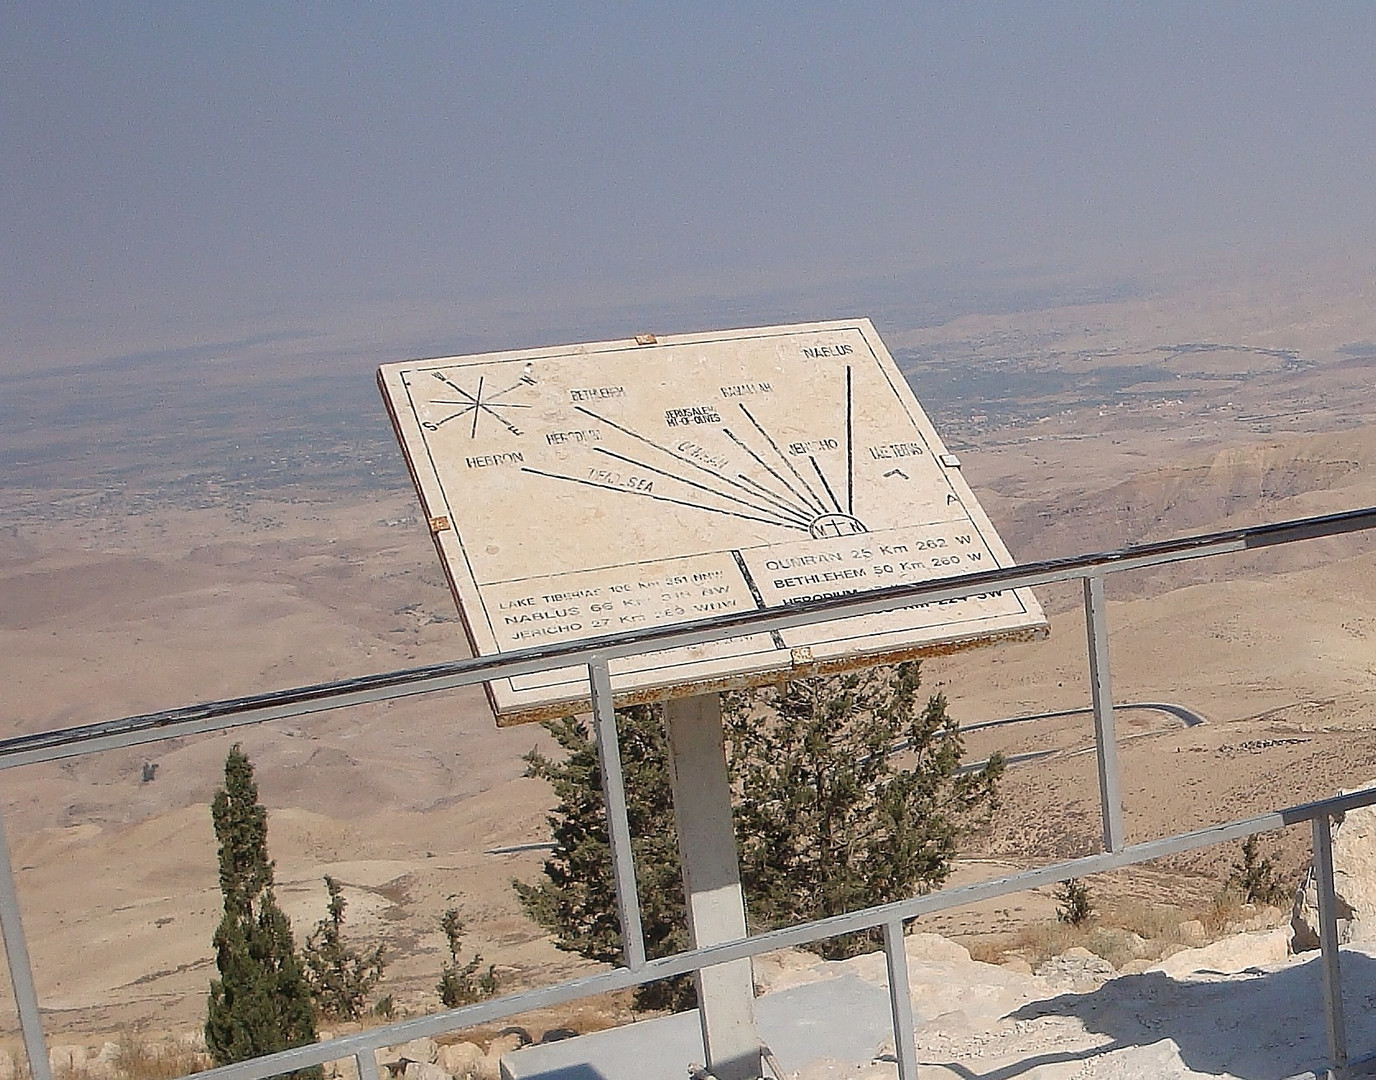 Mapa de la tierra prometida a Moises (Monte Nebo)